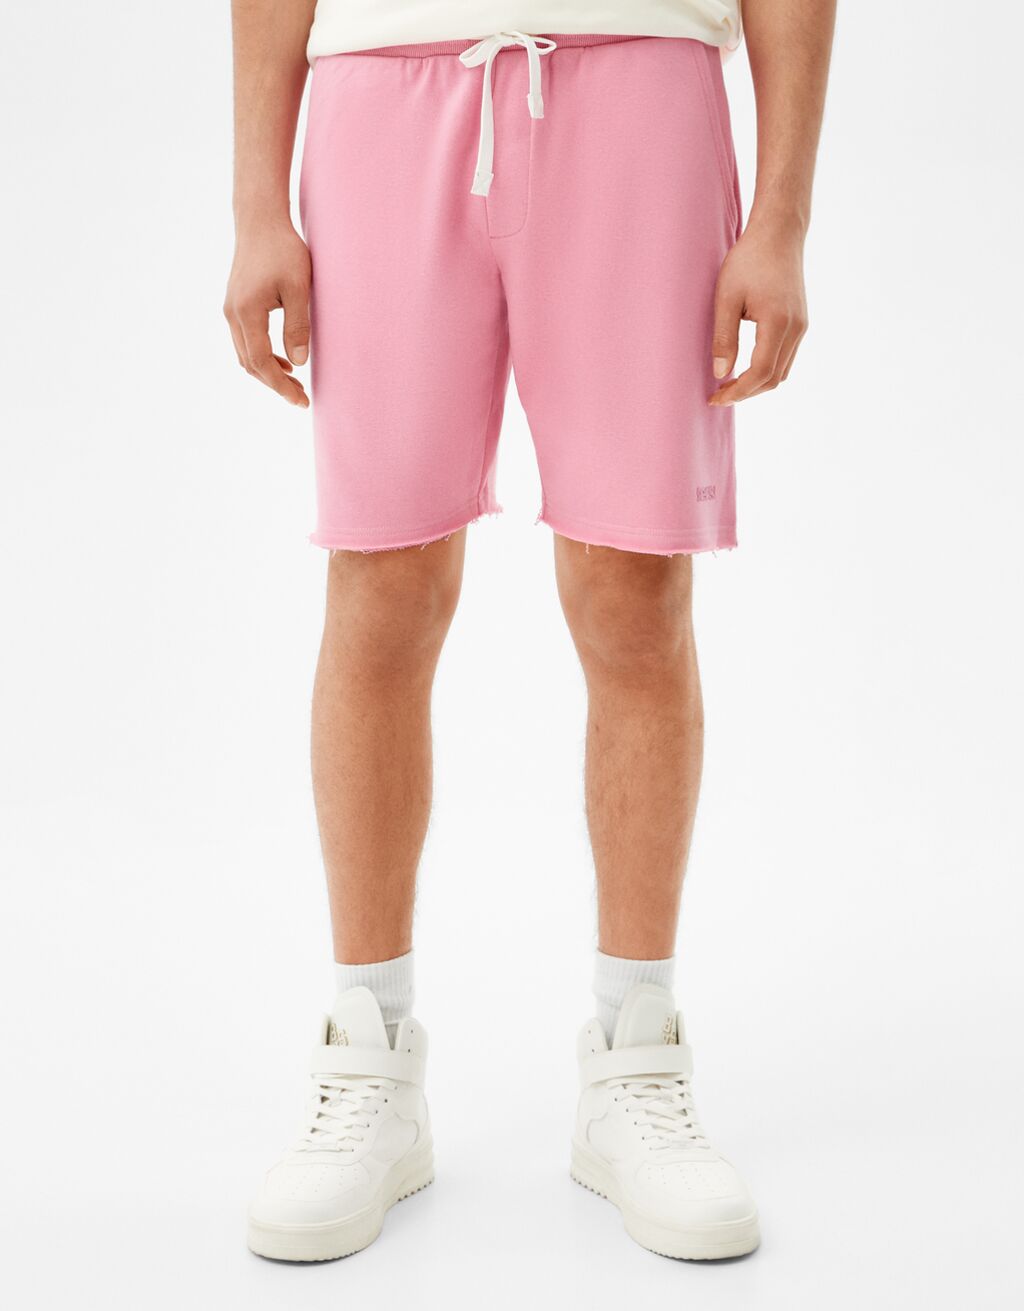 Basic sweatshirt material Bermuda shorts